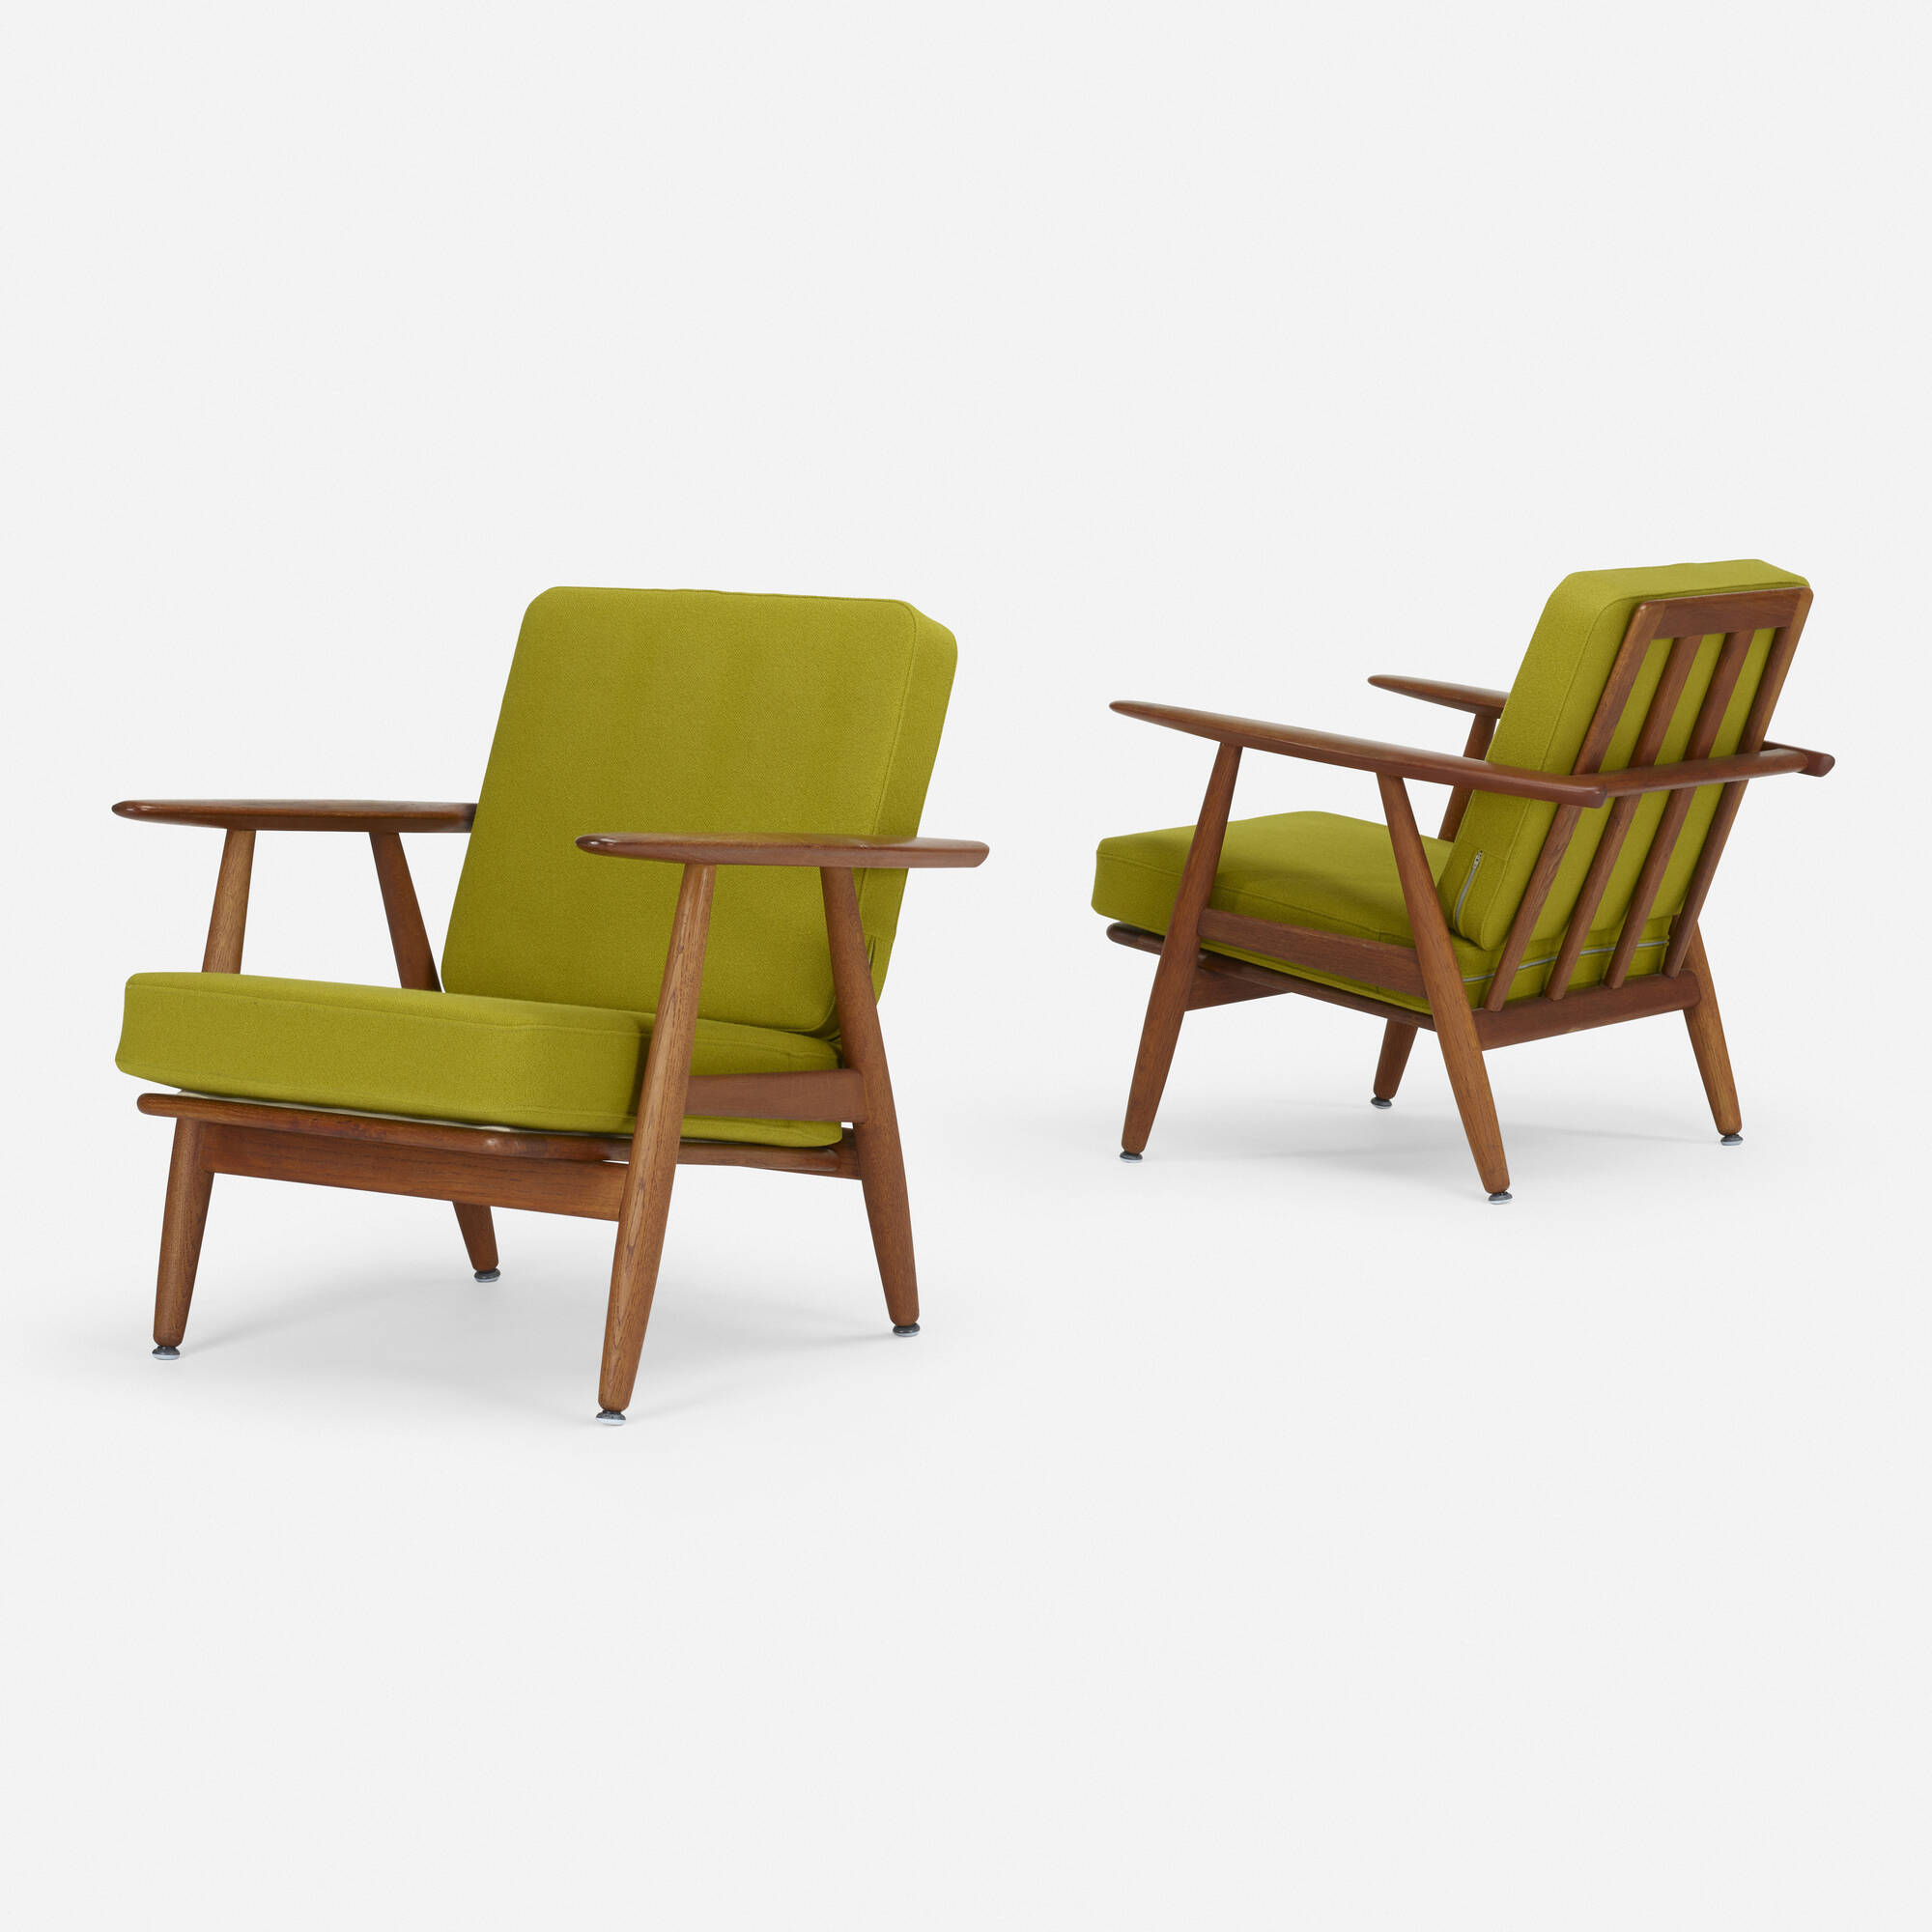 168: HANS J. WEGNER, Lounge chairs model GE240, pair < Design, 31